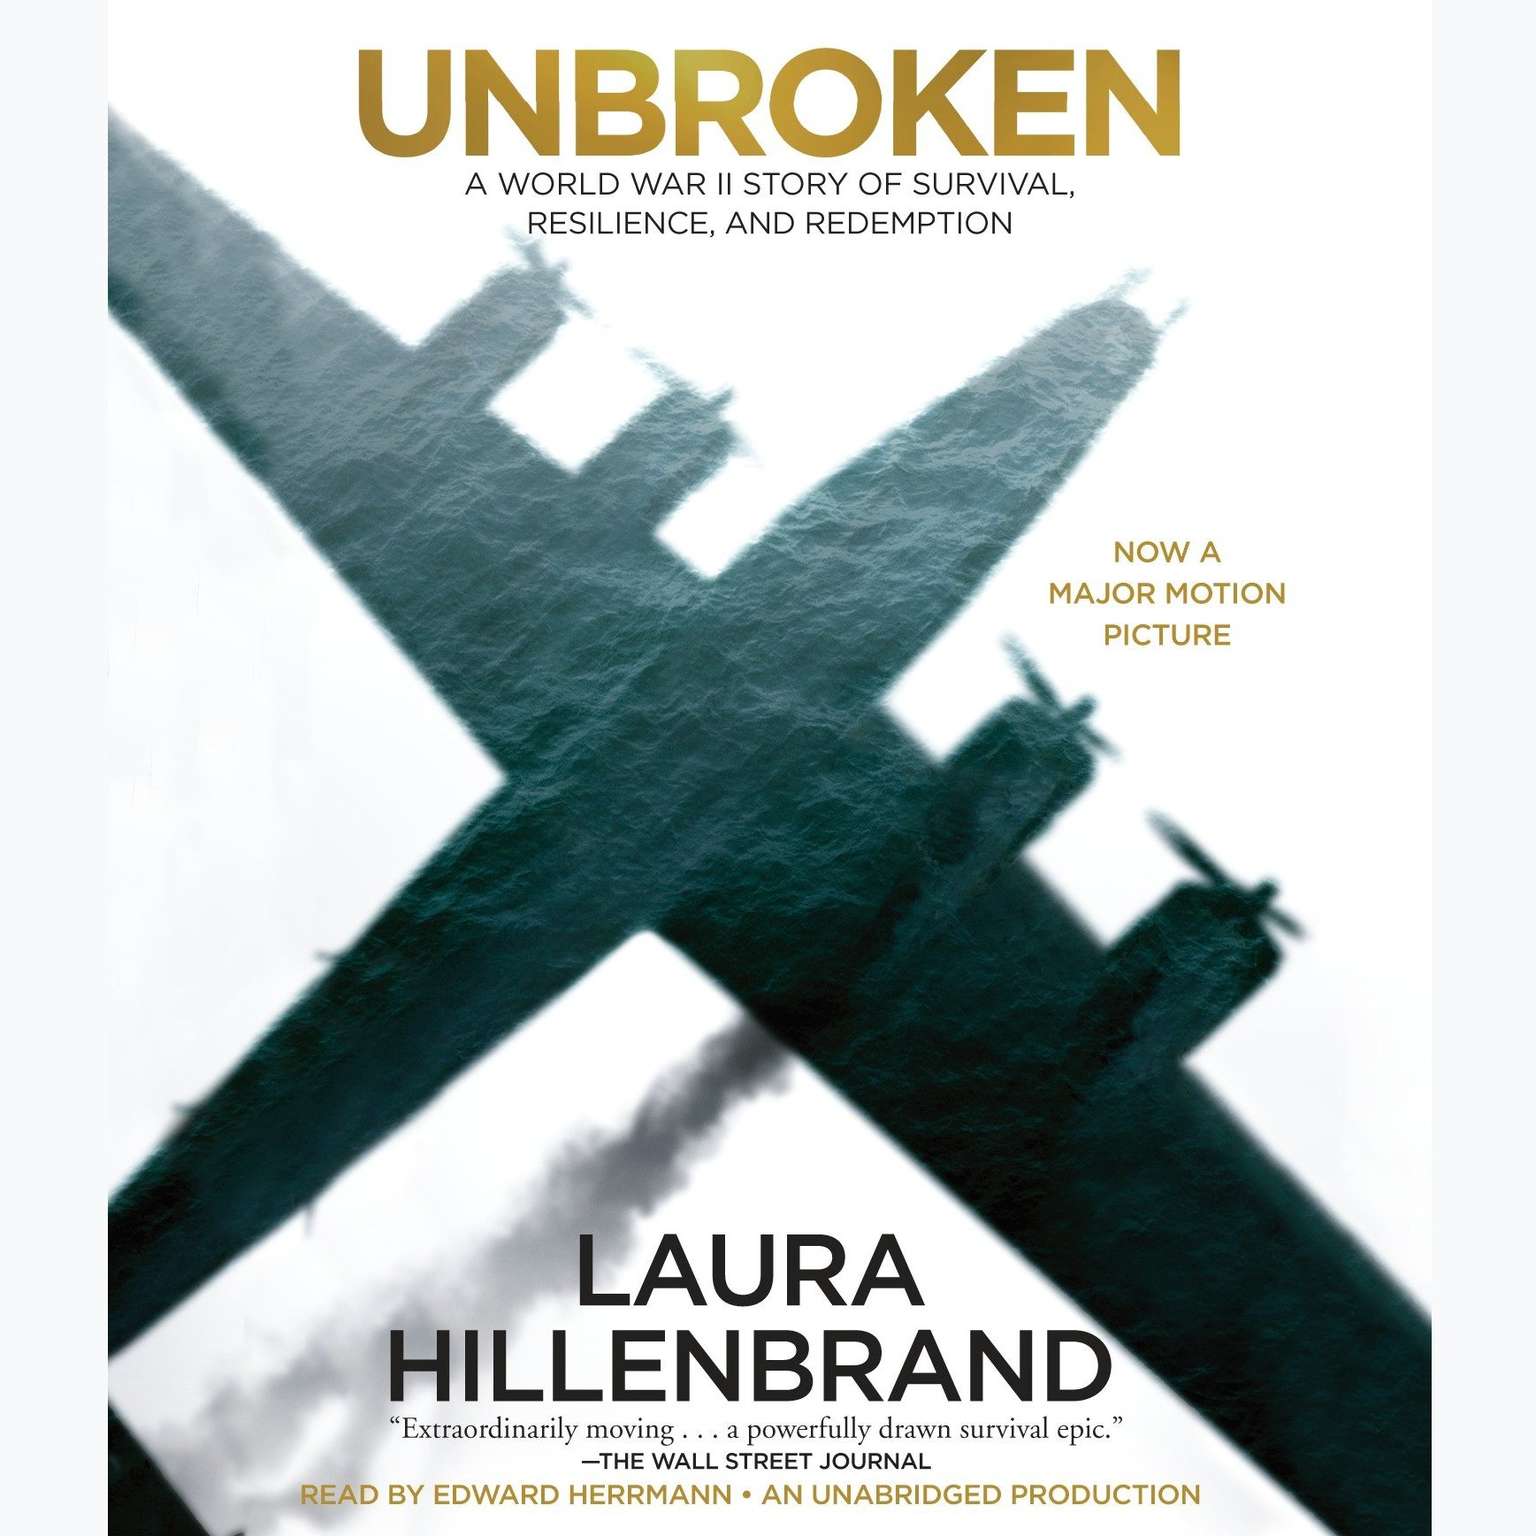 Cover image for Laura Hillenbrand's 'Unbroken'